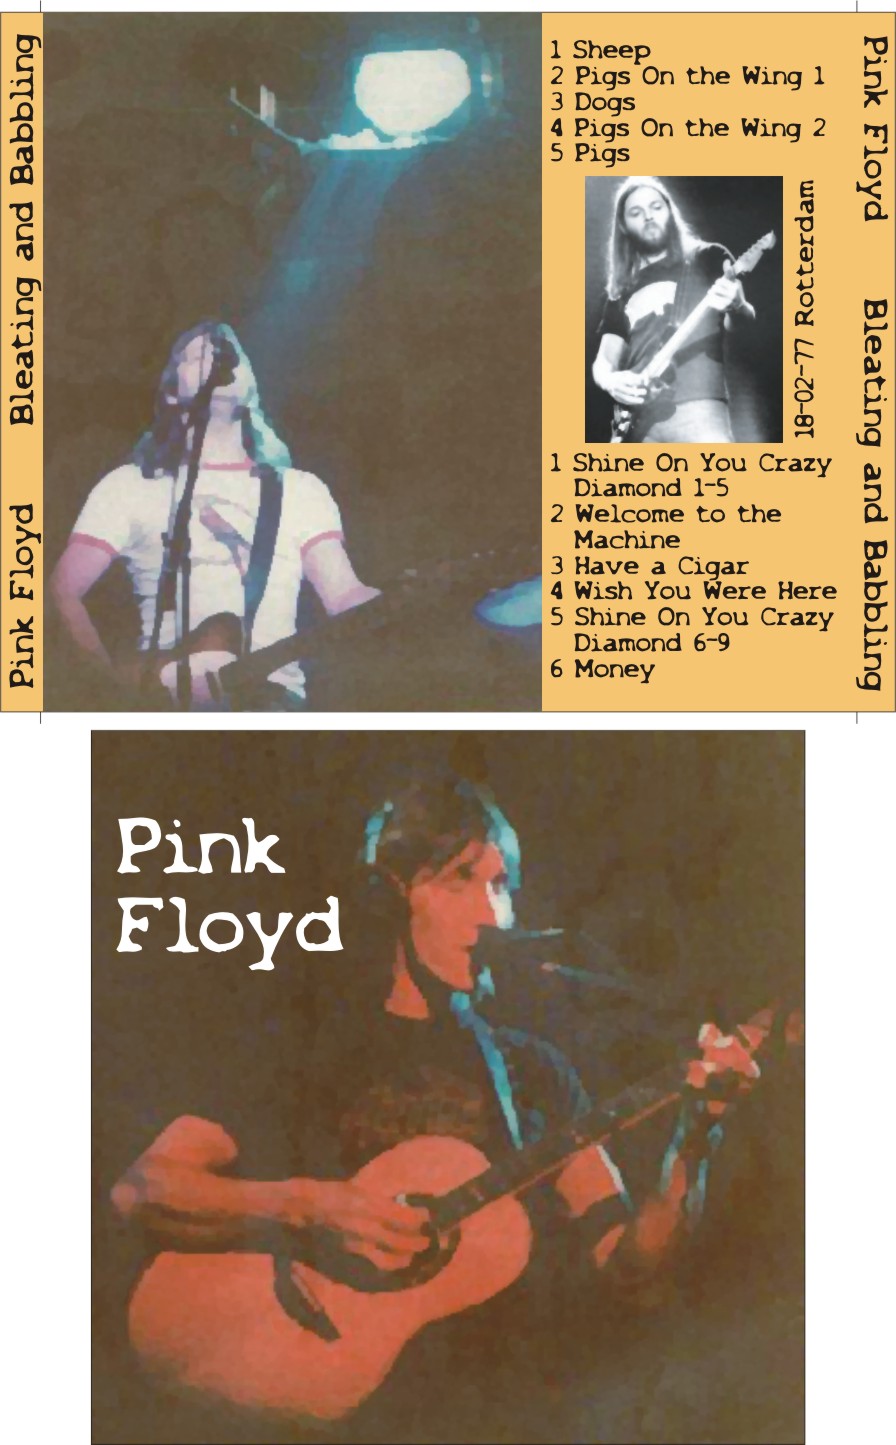 PinkFloyd1977-02-18AhoyHallenRotterdamHolland.jpg